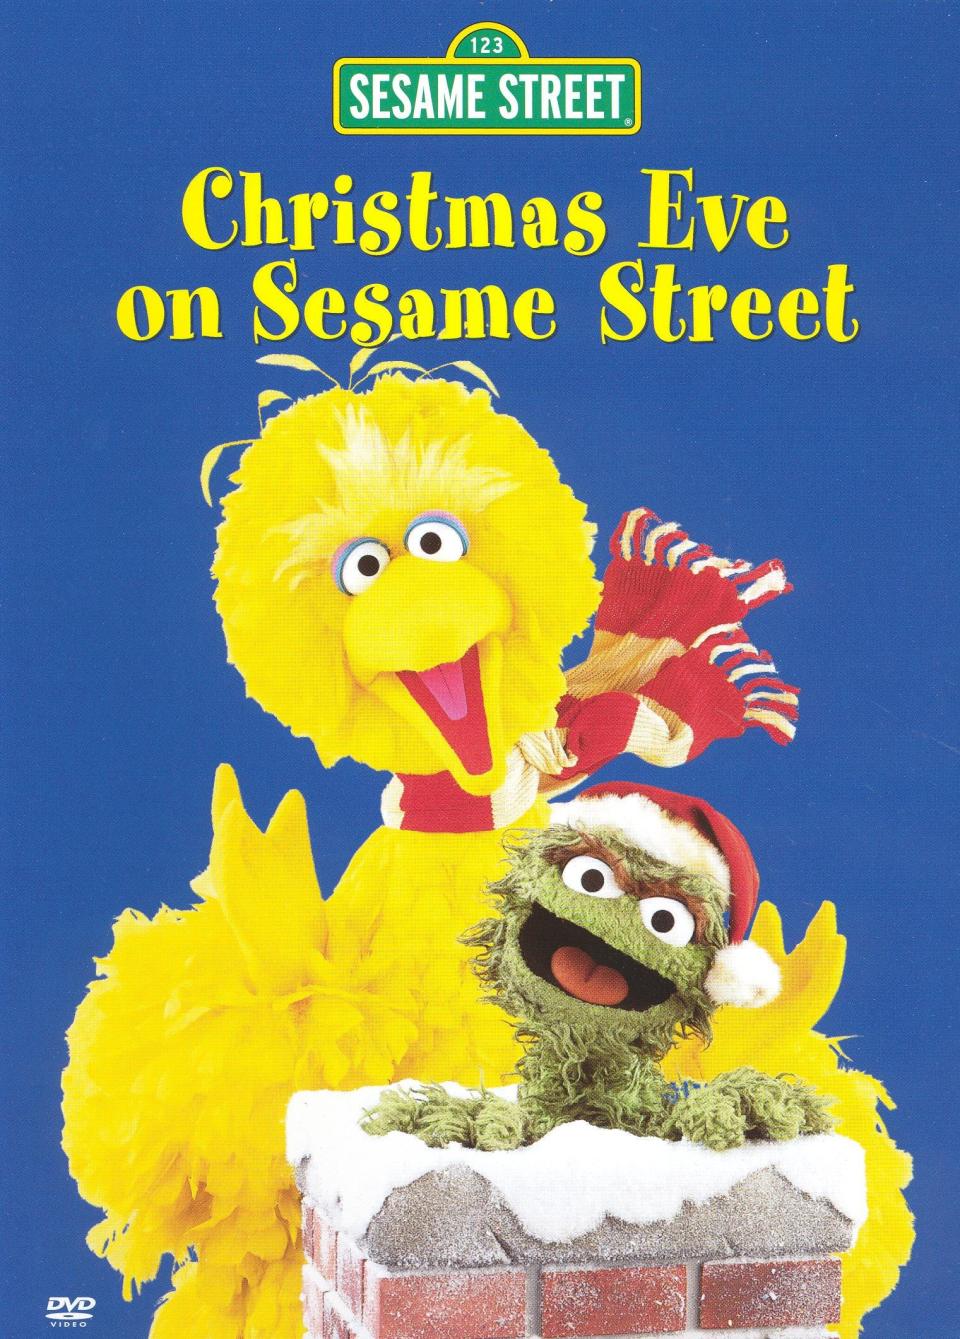 "Christmas Eve on Sesame Street"